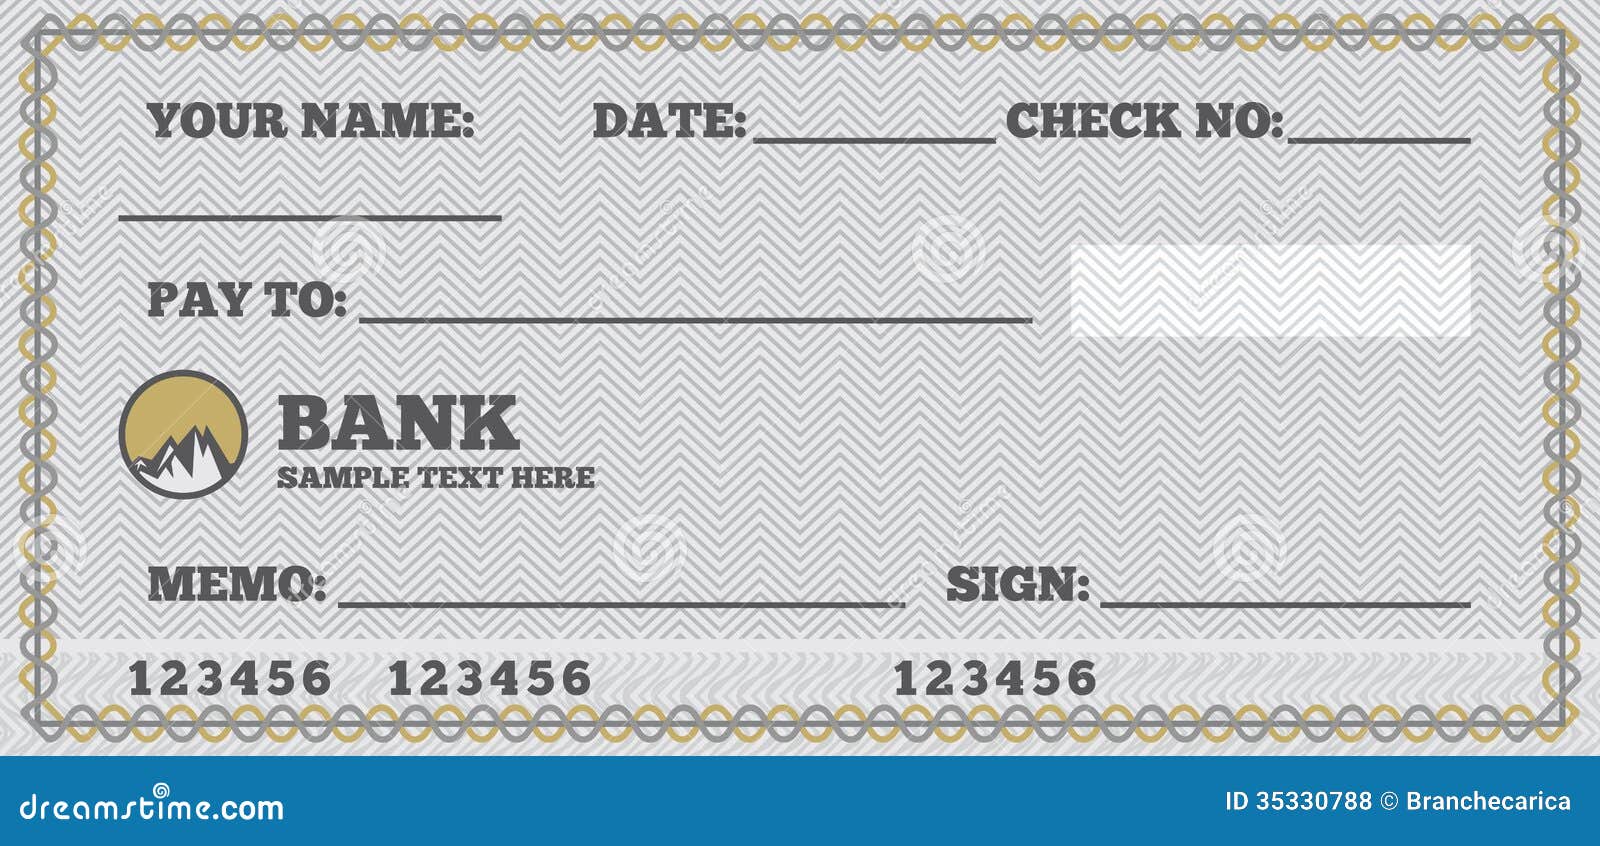 bank check clipart - photo #47